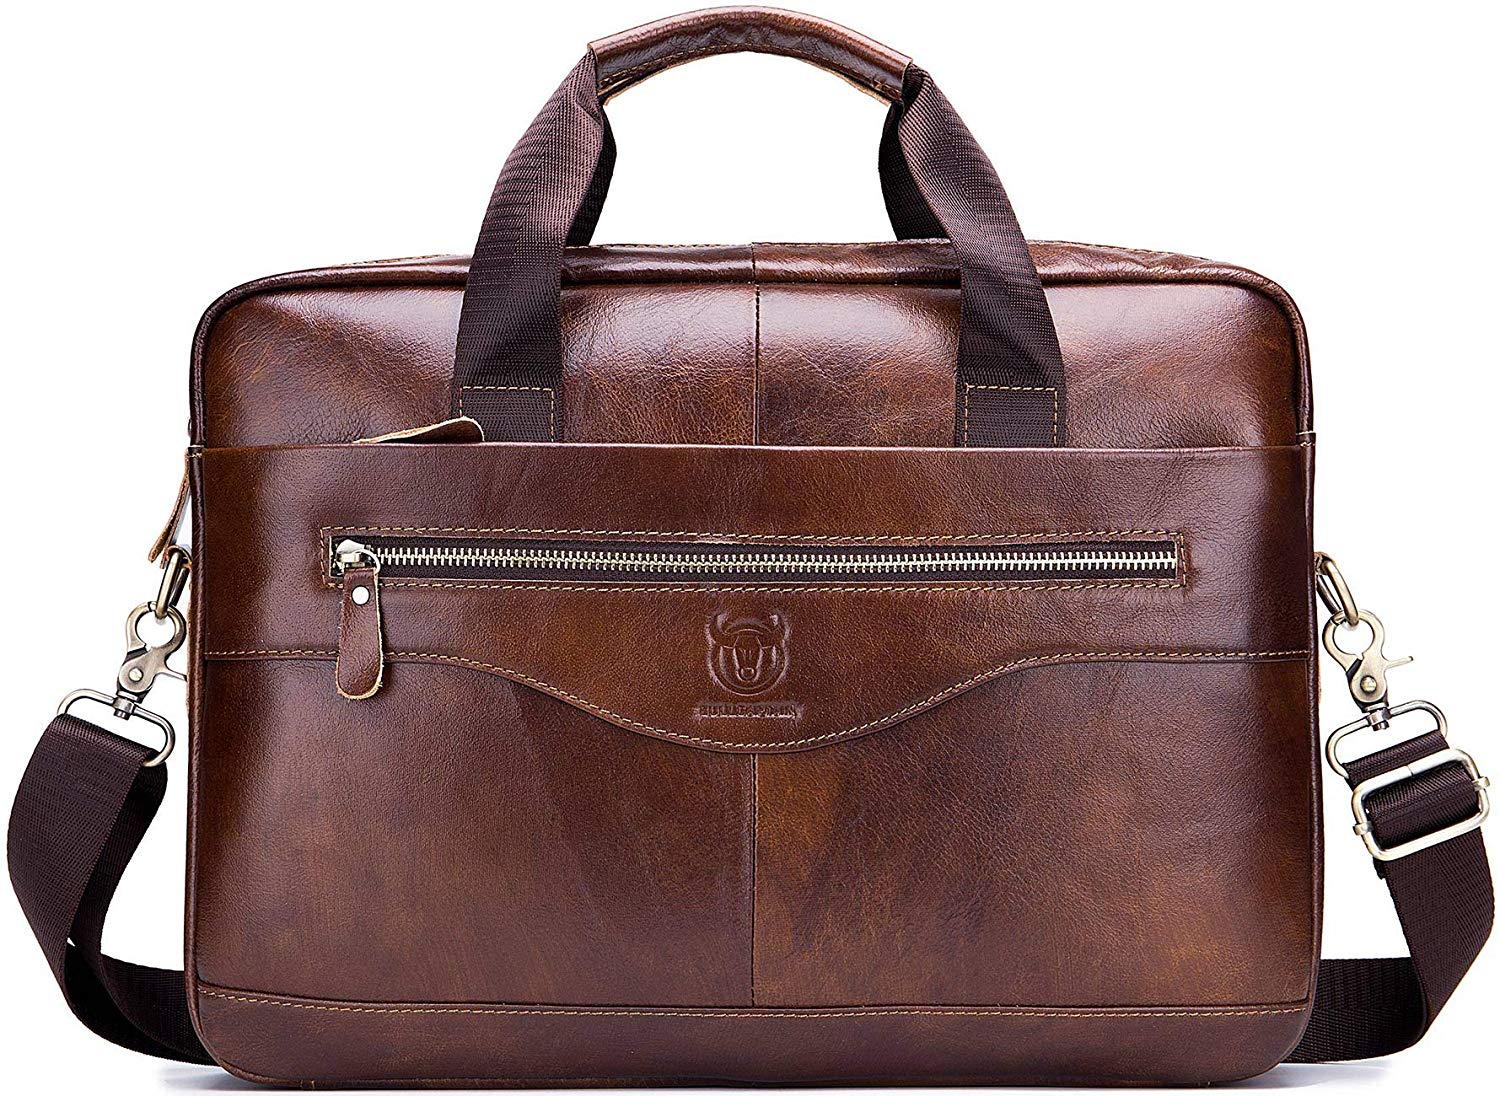 Genuine Leather Briefcase for Men $49.99 (REG $168.99)